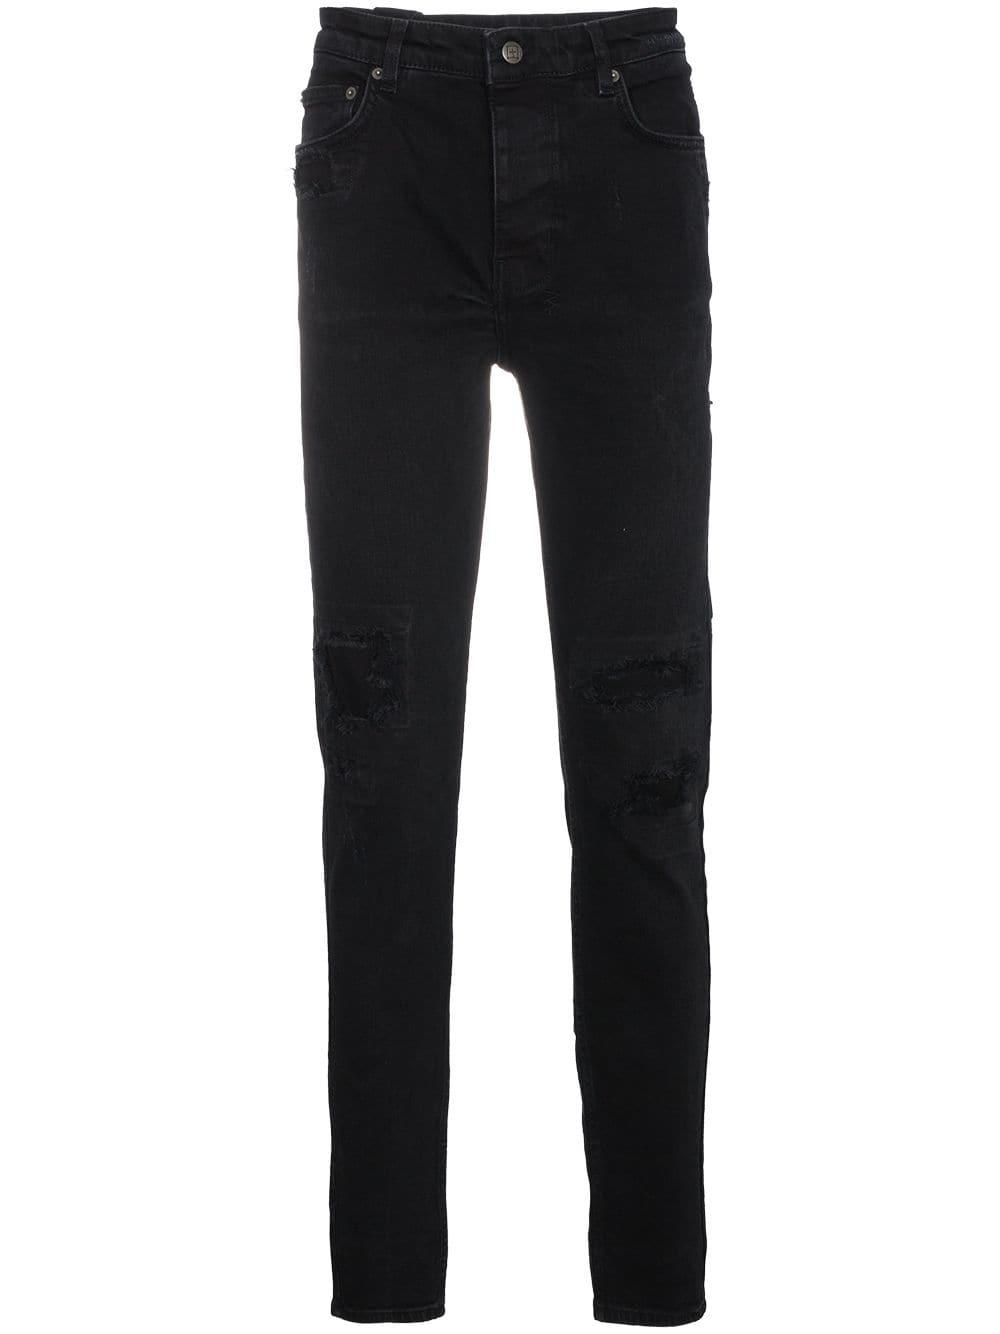 Ksubi Chitch Boneyard Denim Jeans in Black for Men - Save 65% - Lyst